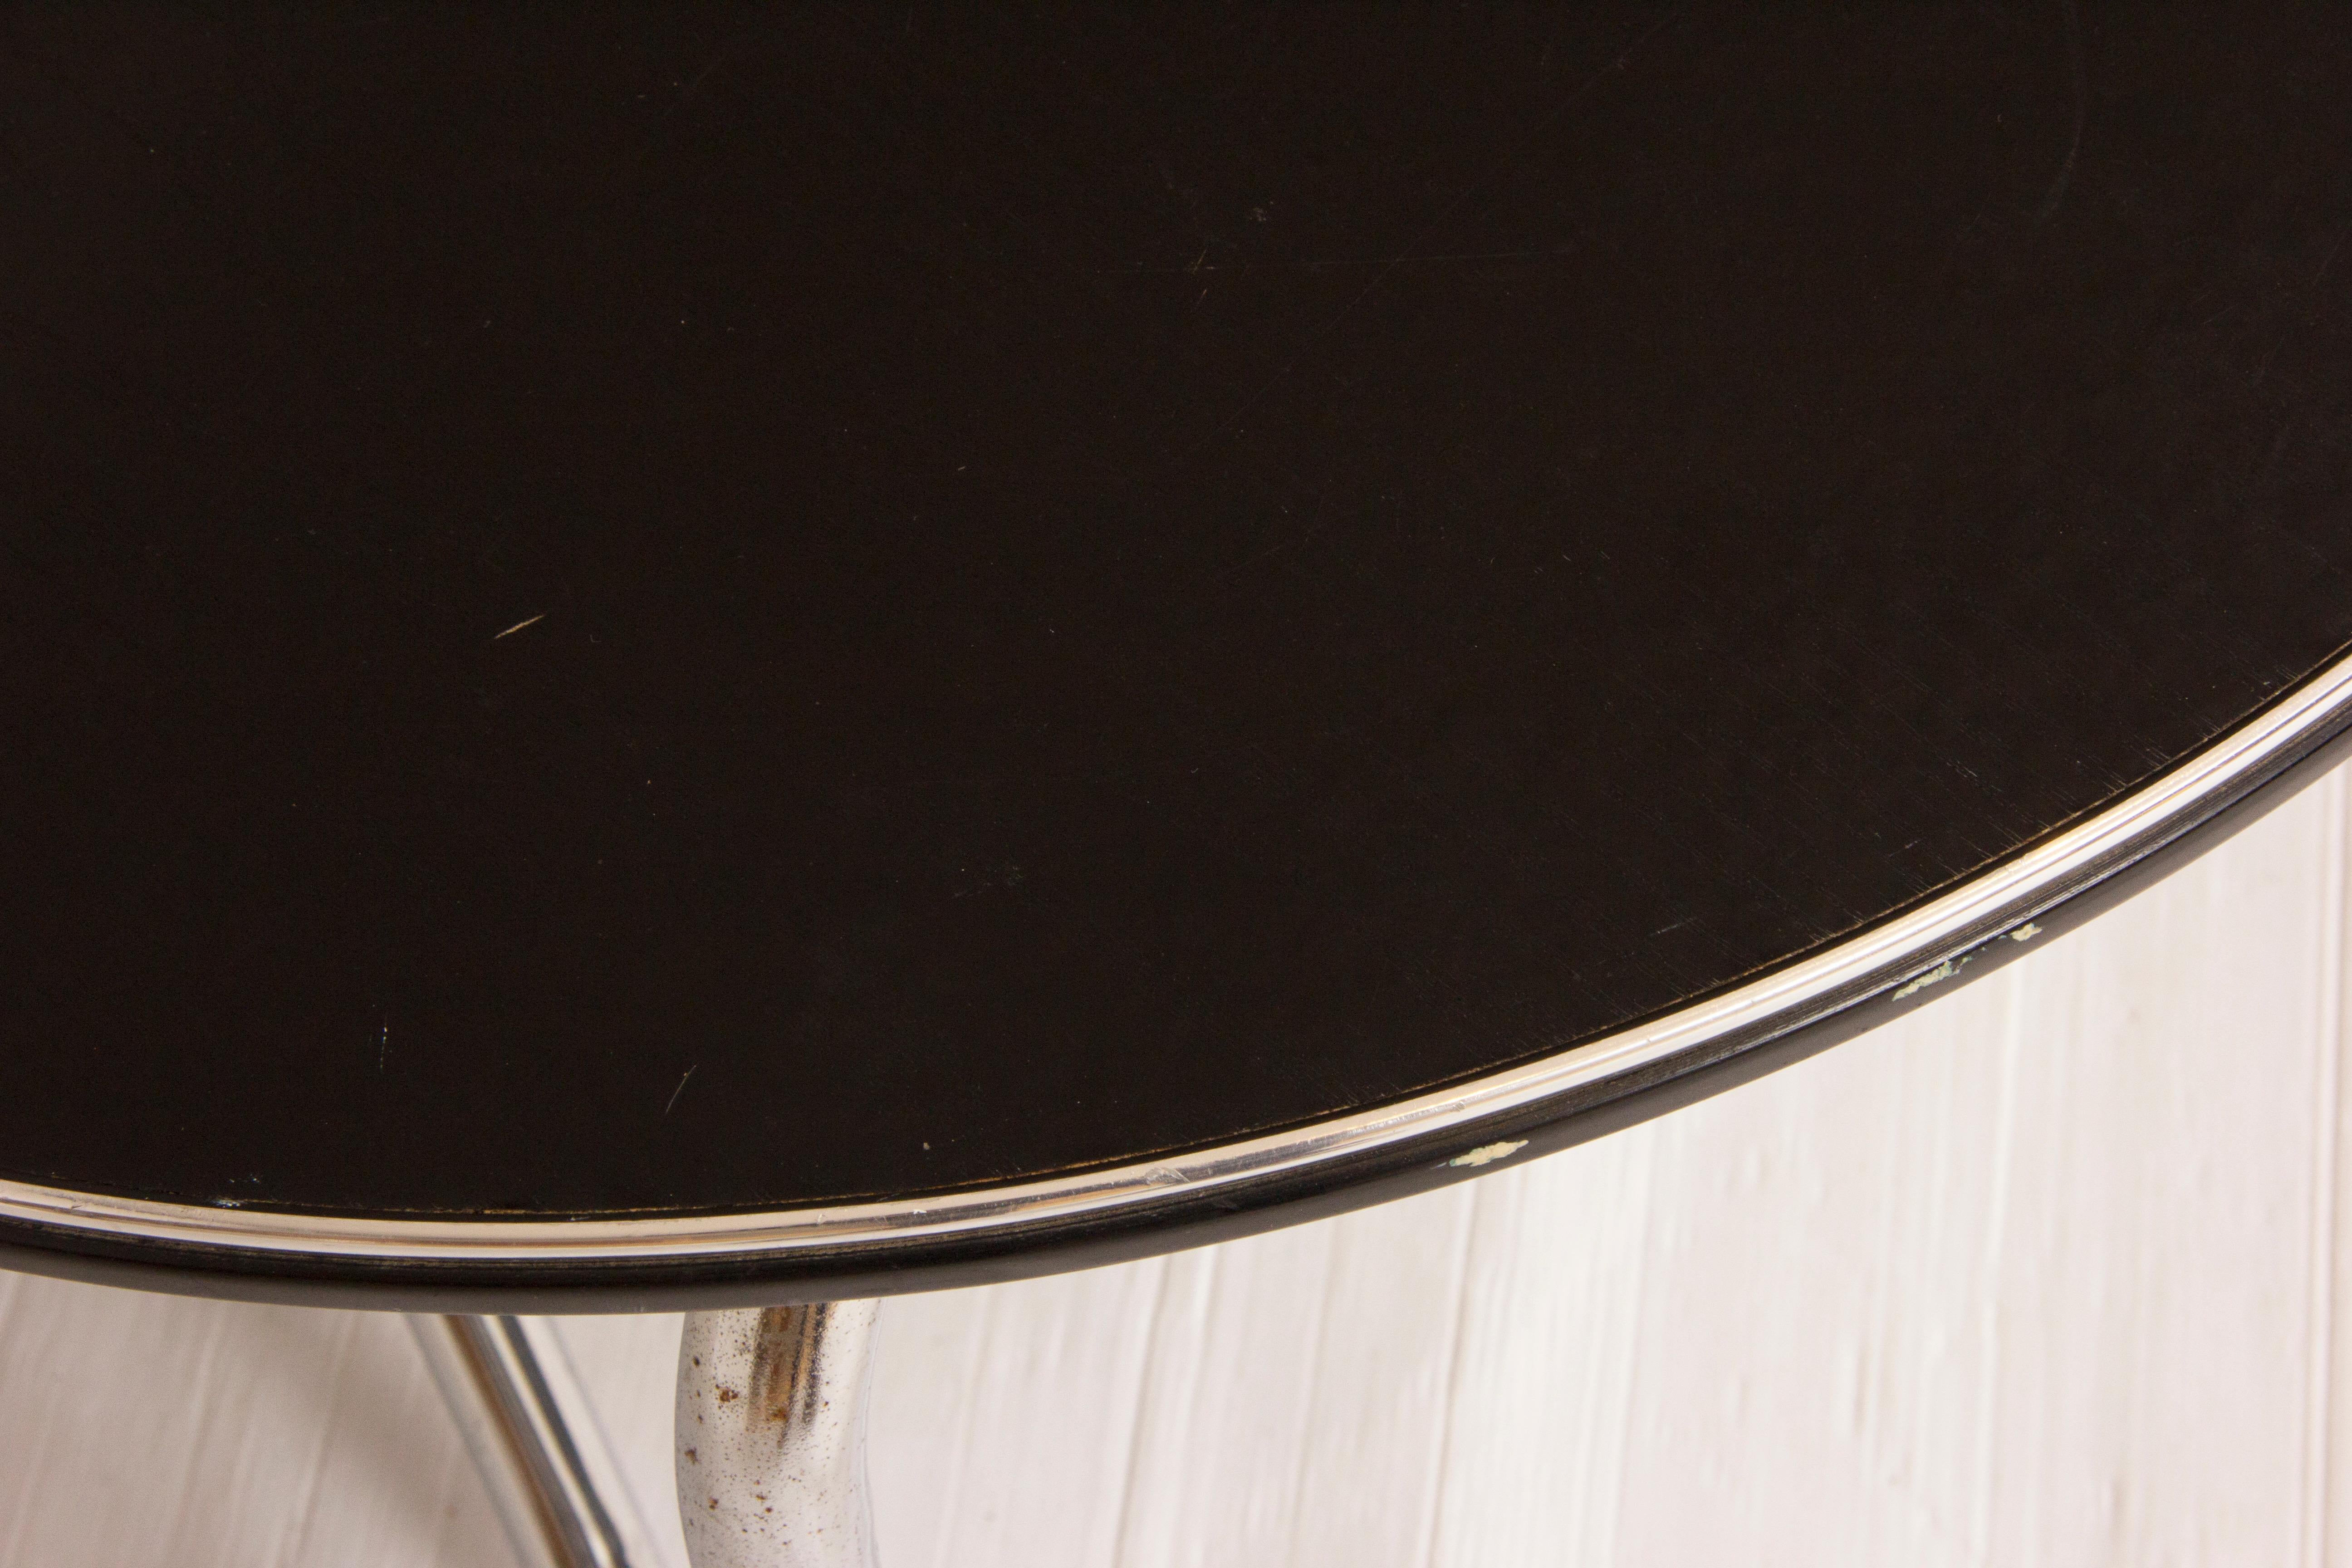 Black ash and tubular chrome coffee table,
British, circa 1960.
Measures: H 38cm, W 61cm, D 61cm.